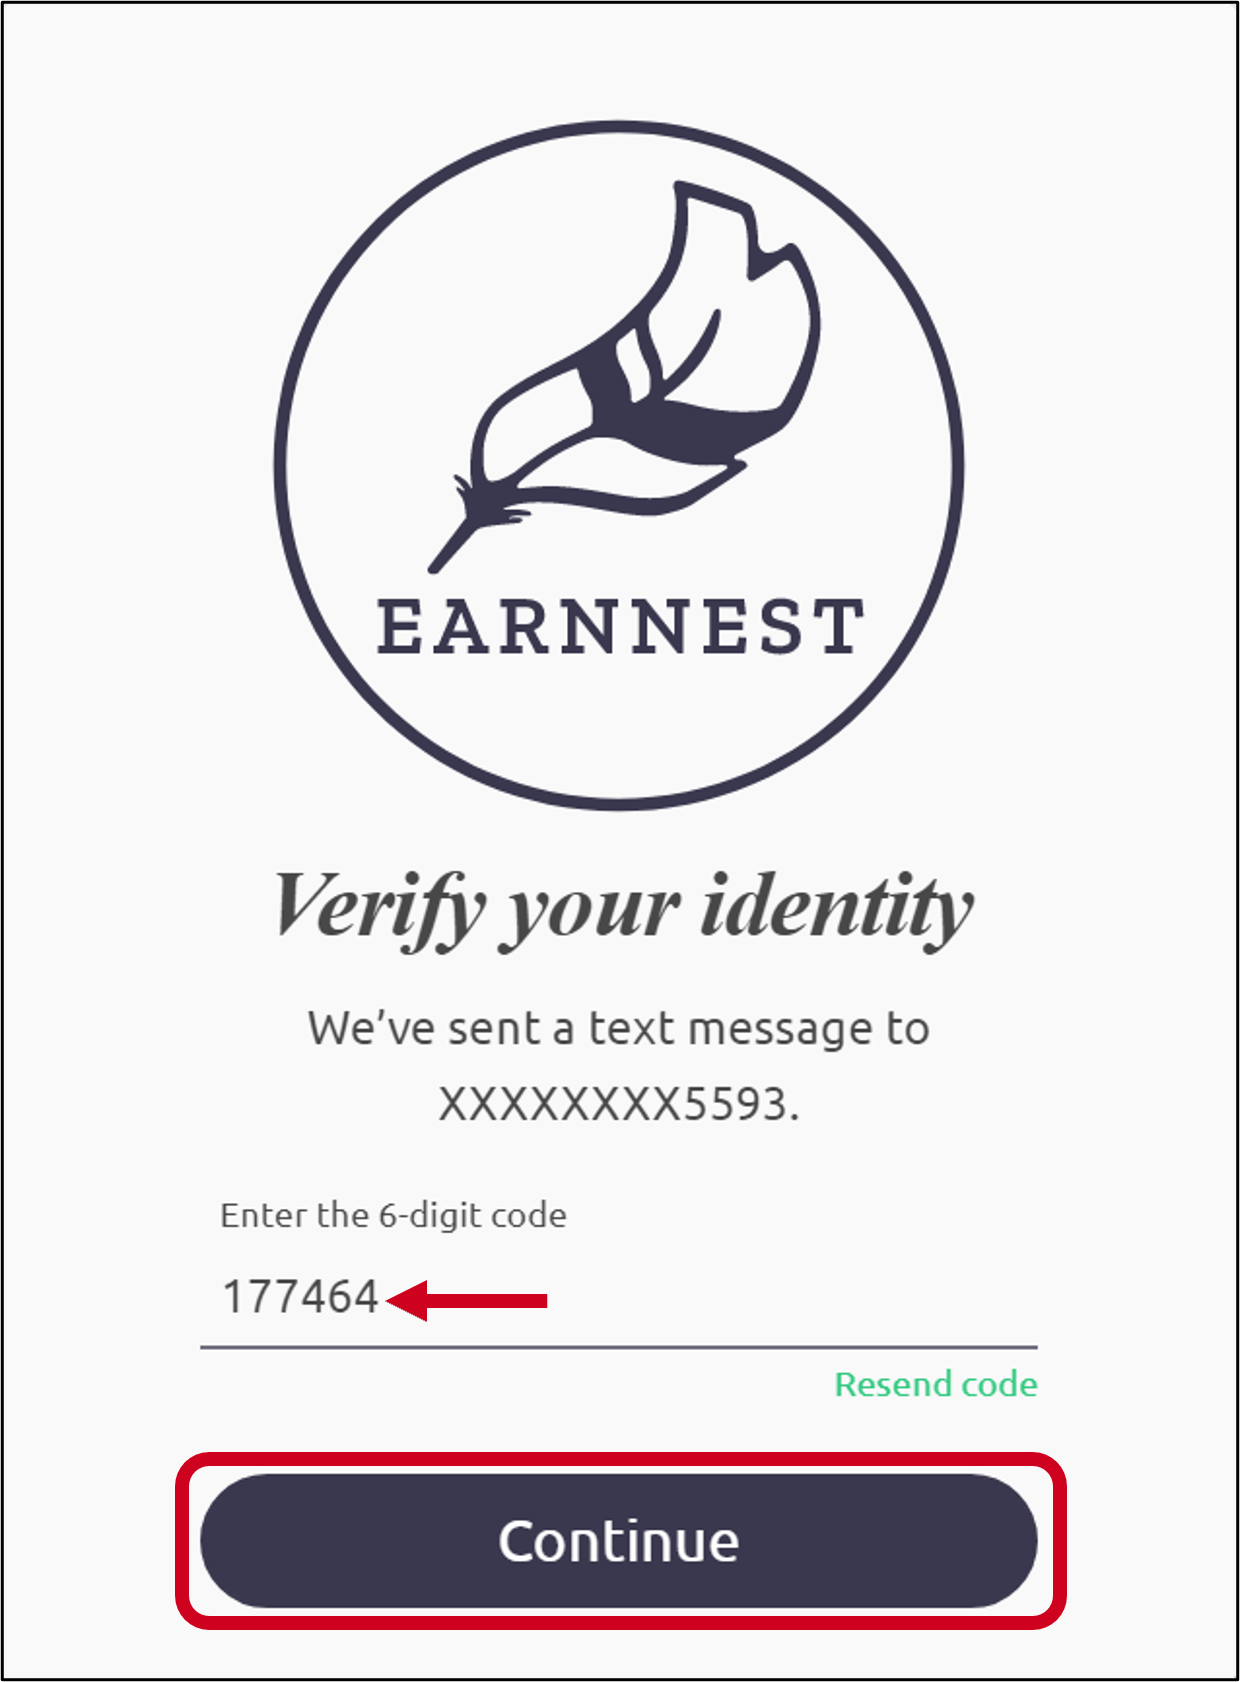 earnnest_verify_phone_3.png